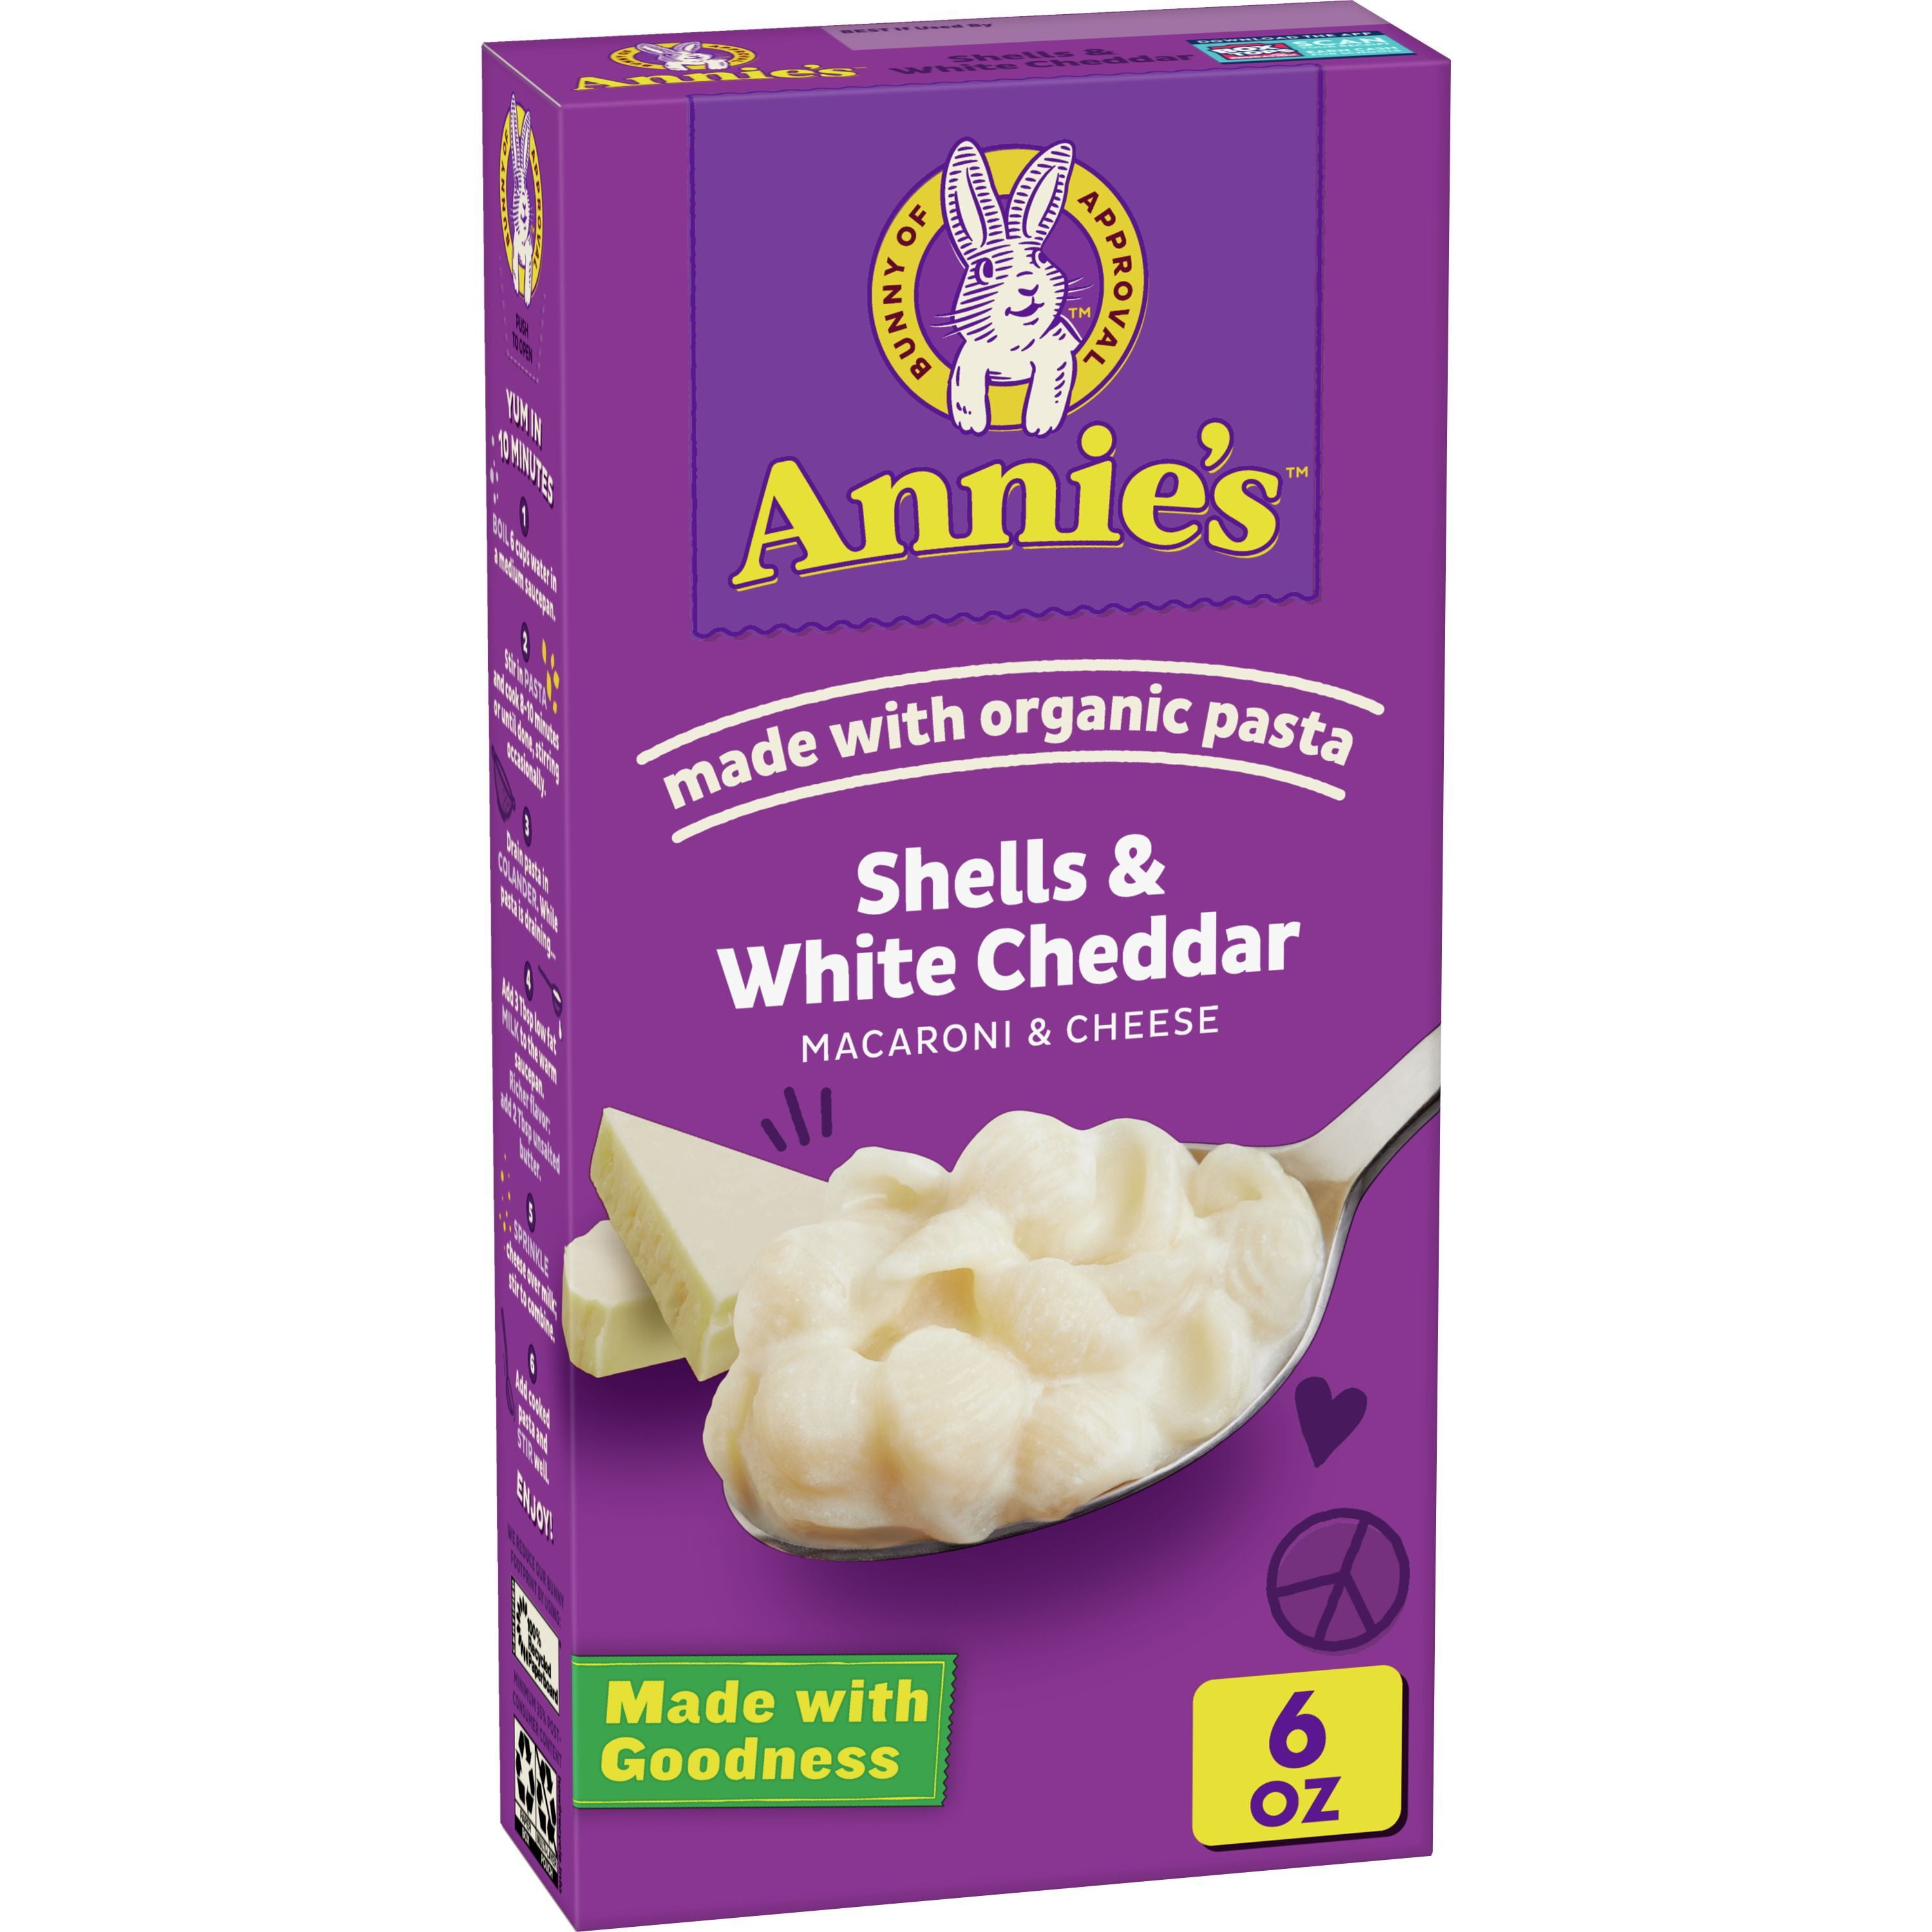 Annie’s White Cheddar Shells Macaroni & Cheese Dinner with Organic Pasta, 6 OZ